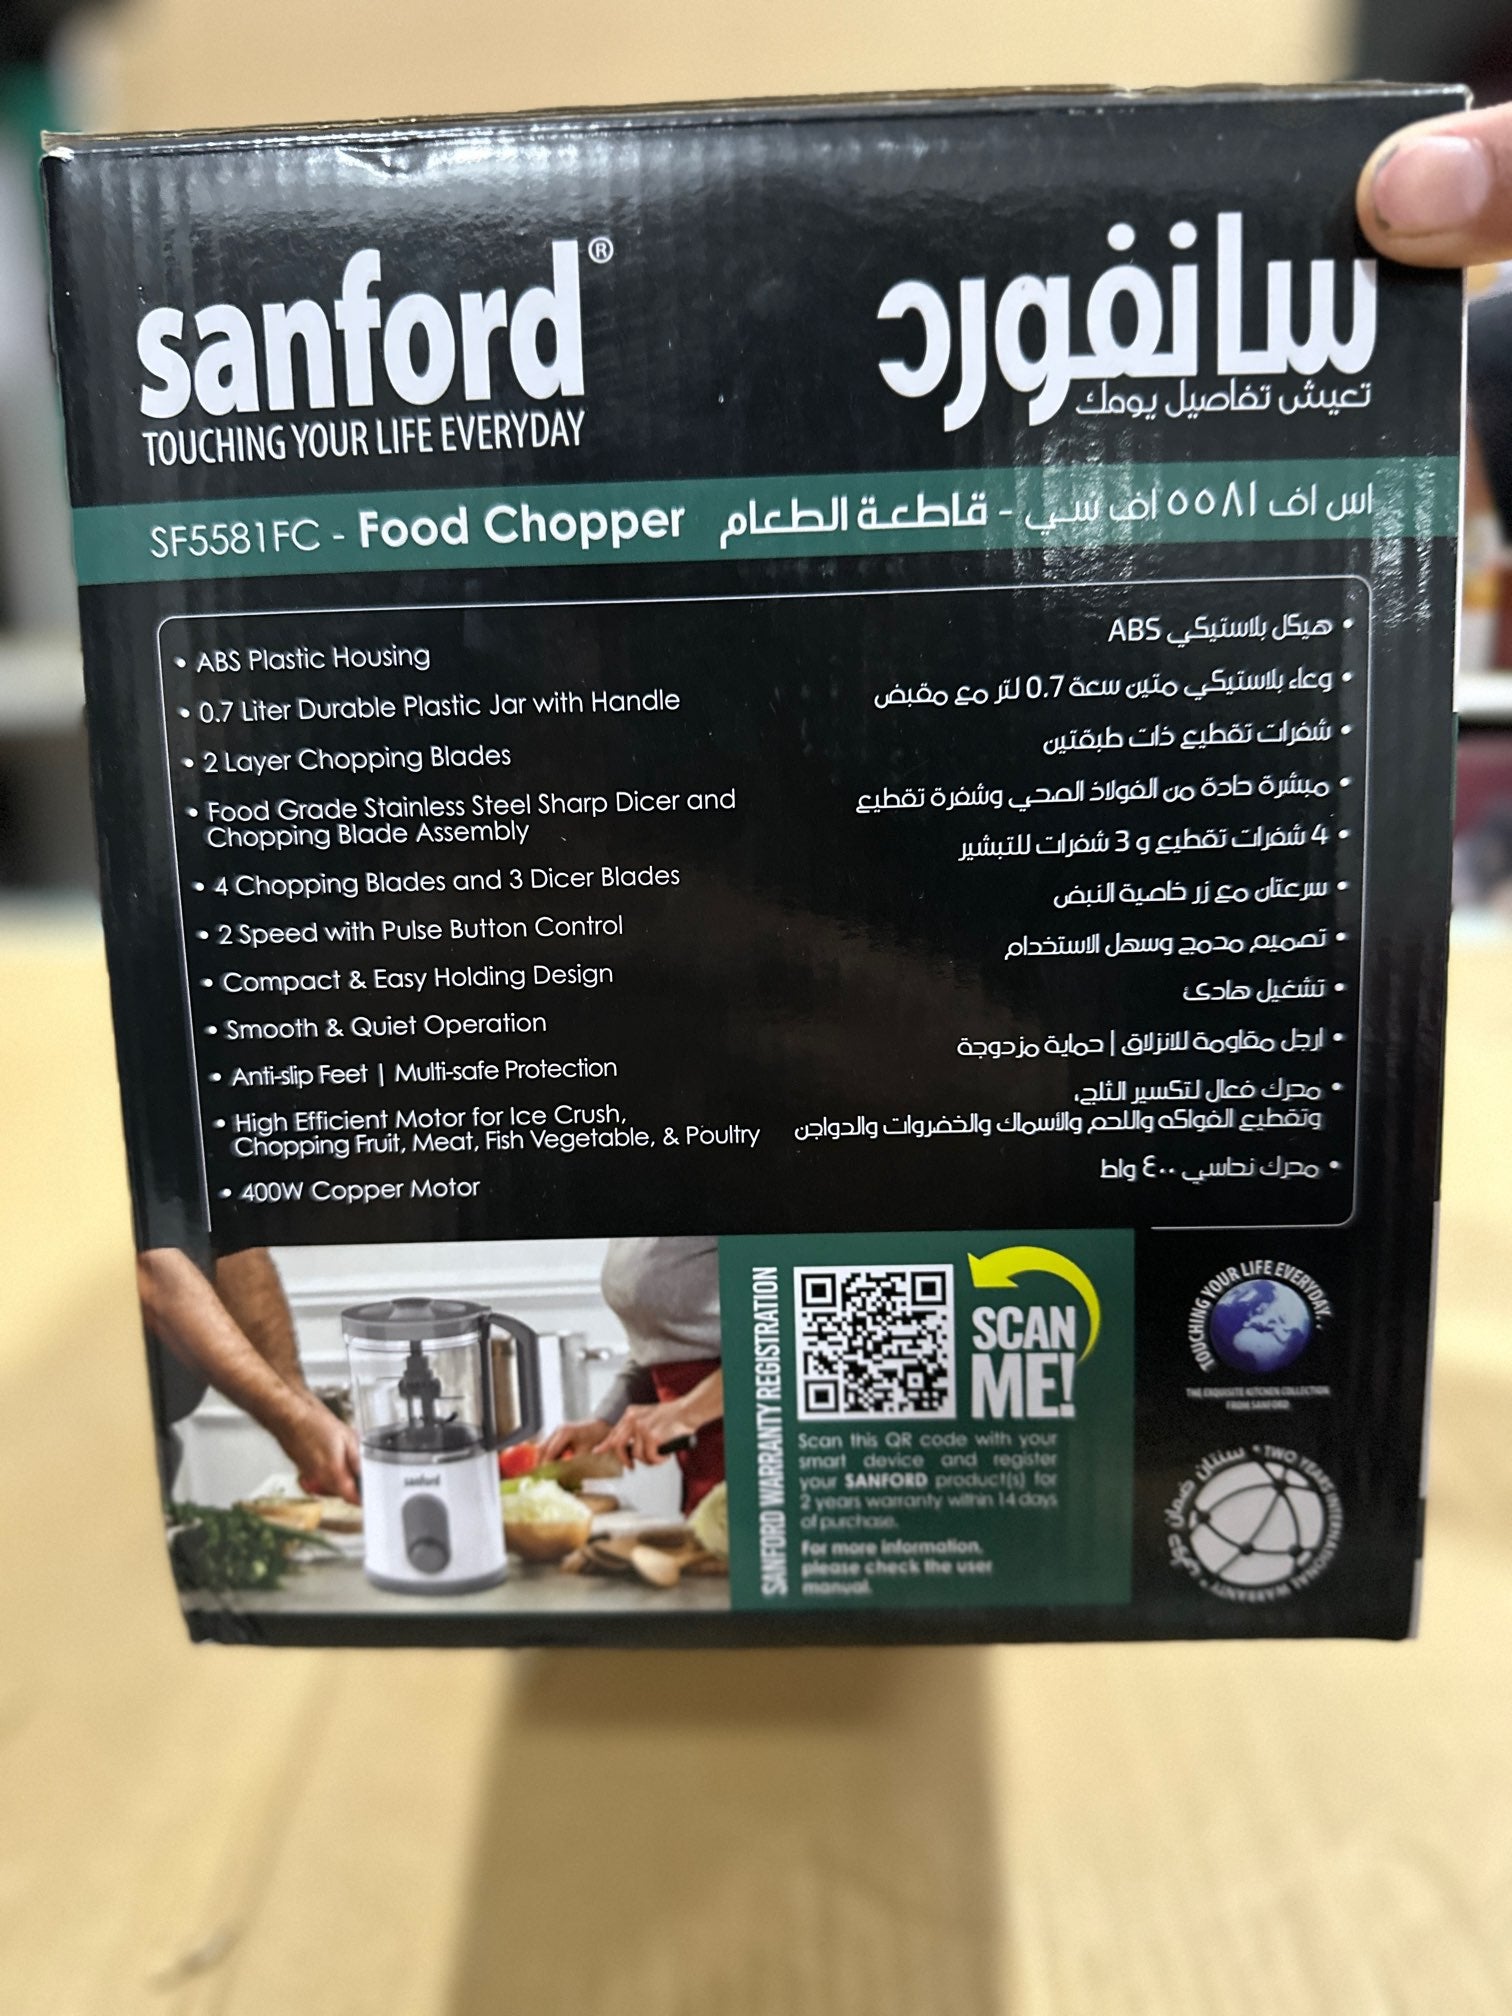 Japan lot imported Sanford Food Chopper